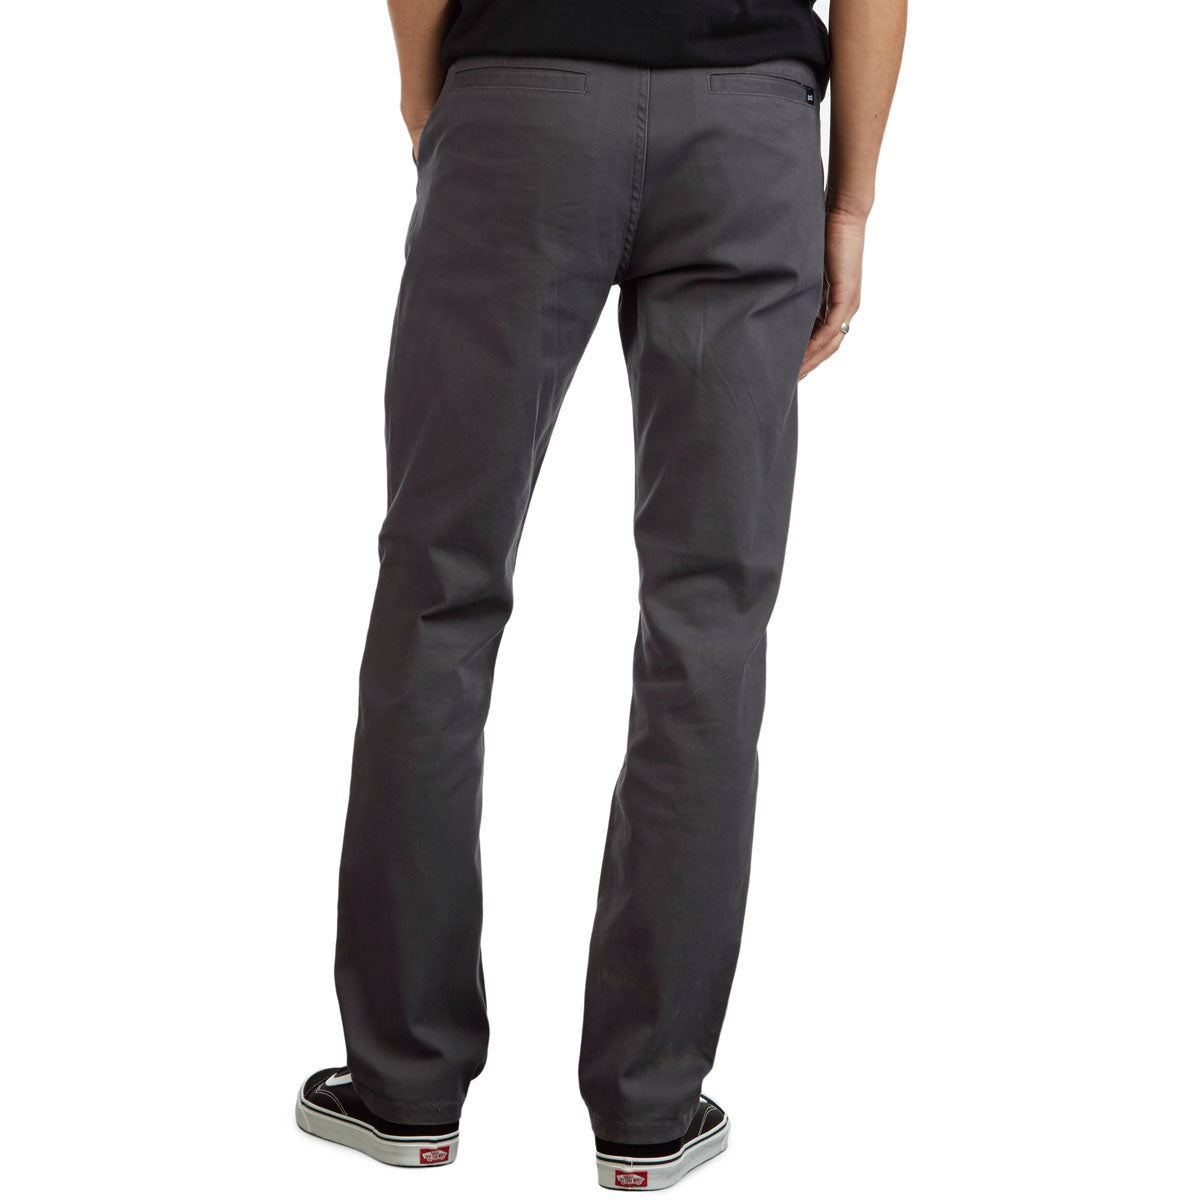 CCS Standard Plus Slim Chino Pants - Grey image 3